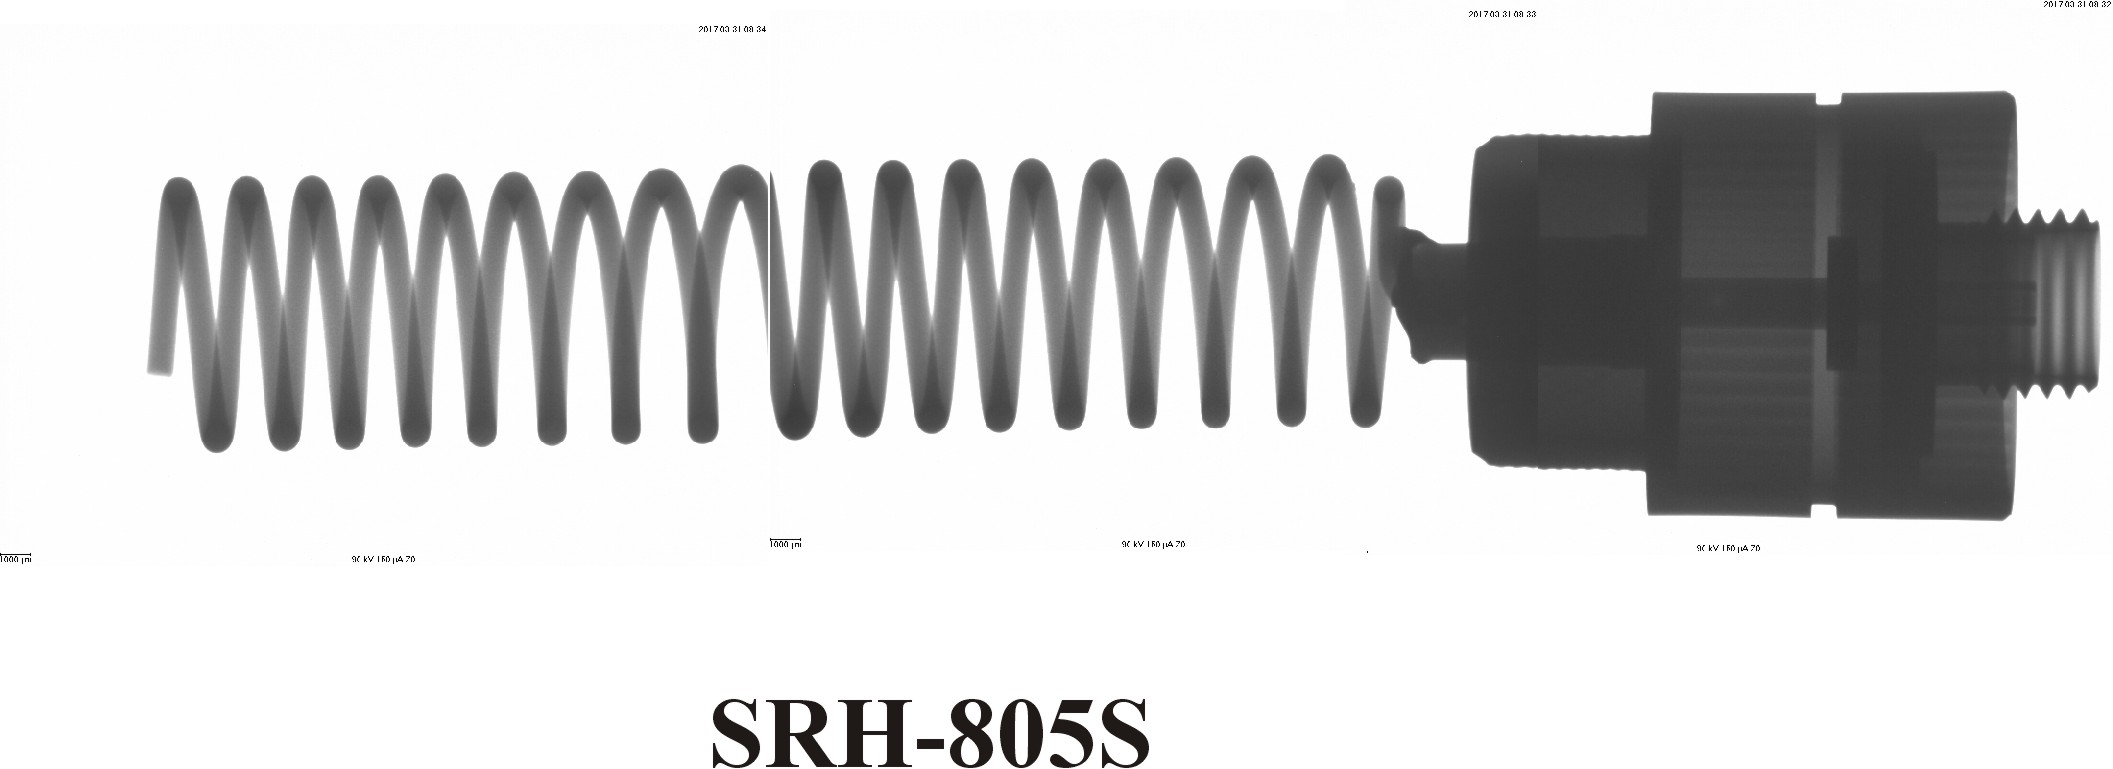 srh-805s